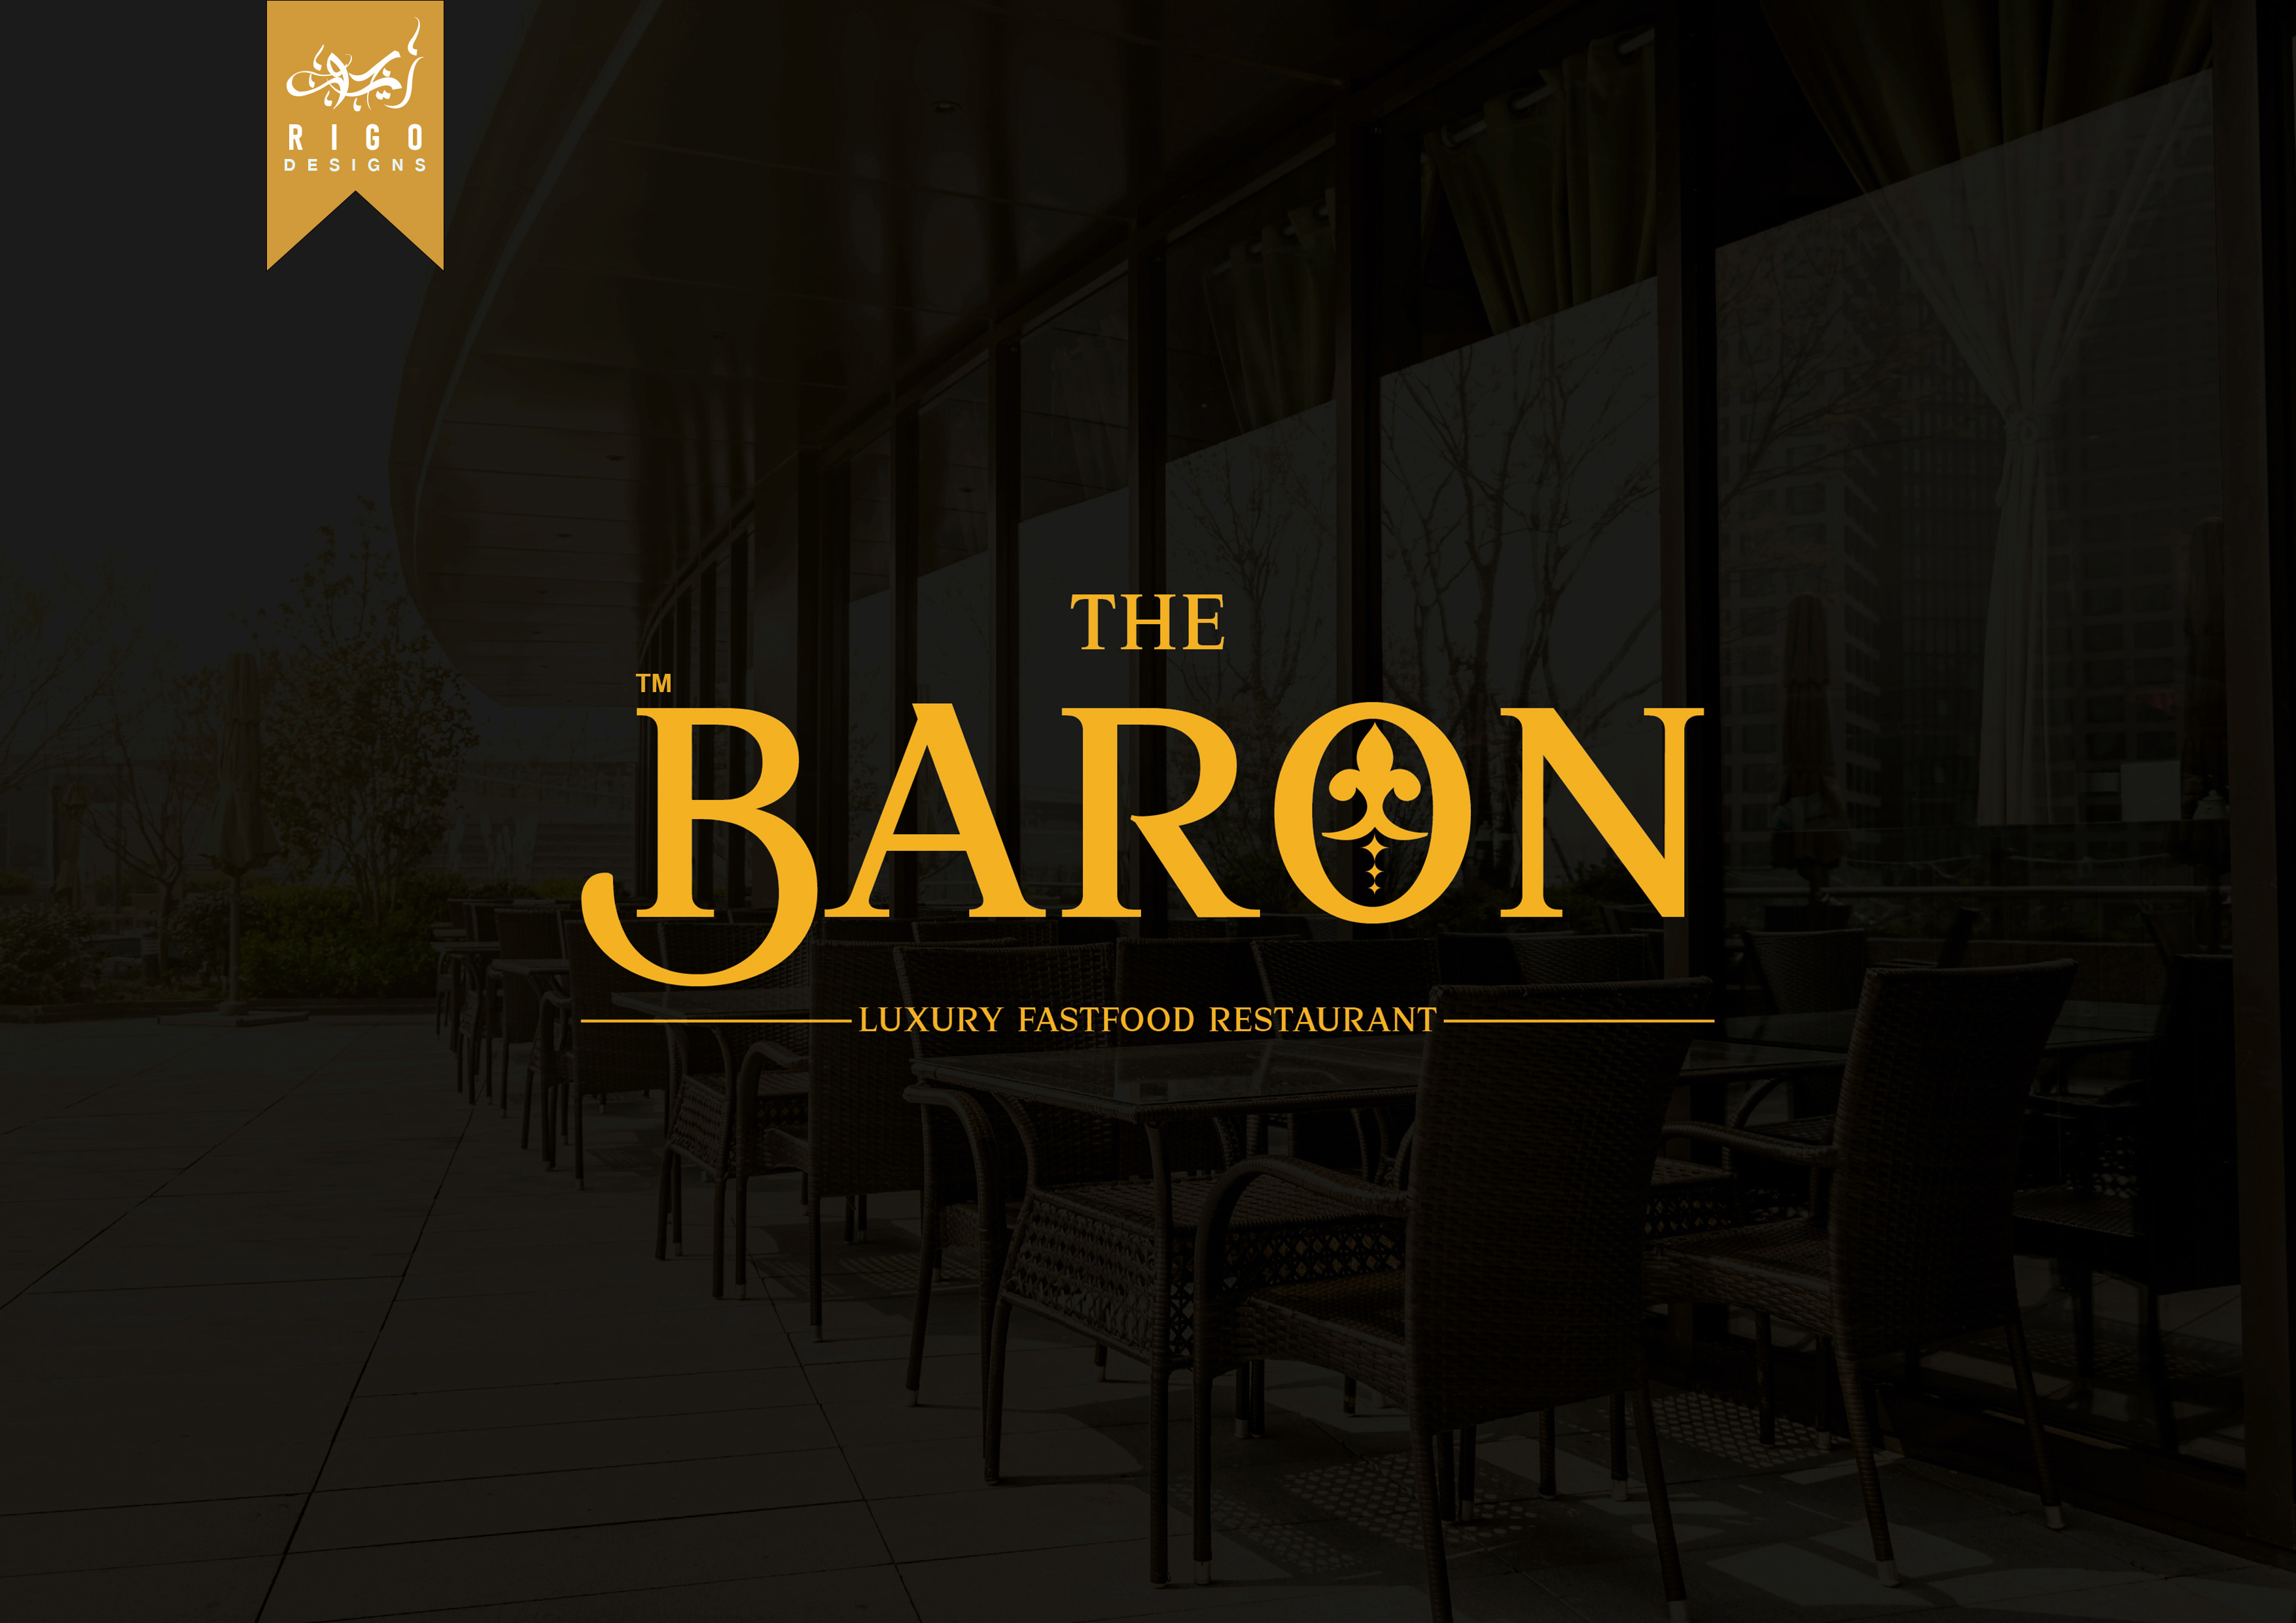 The Baron Fast Food Restaurant Brand Identity